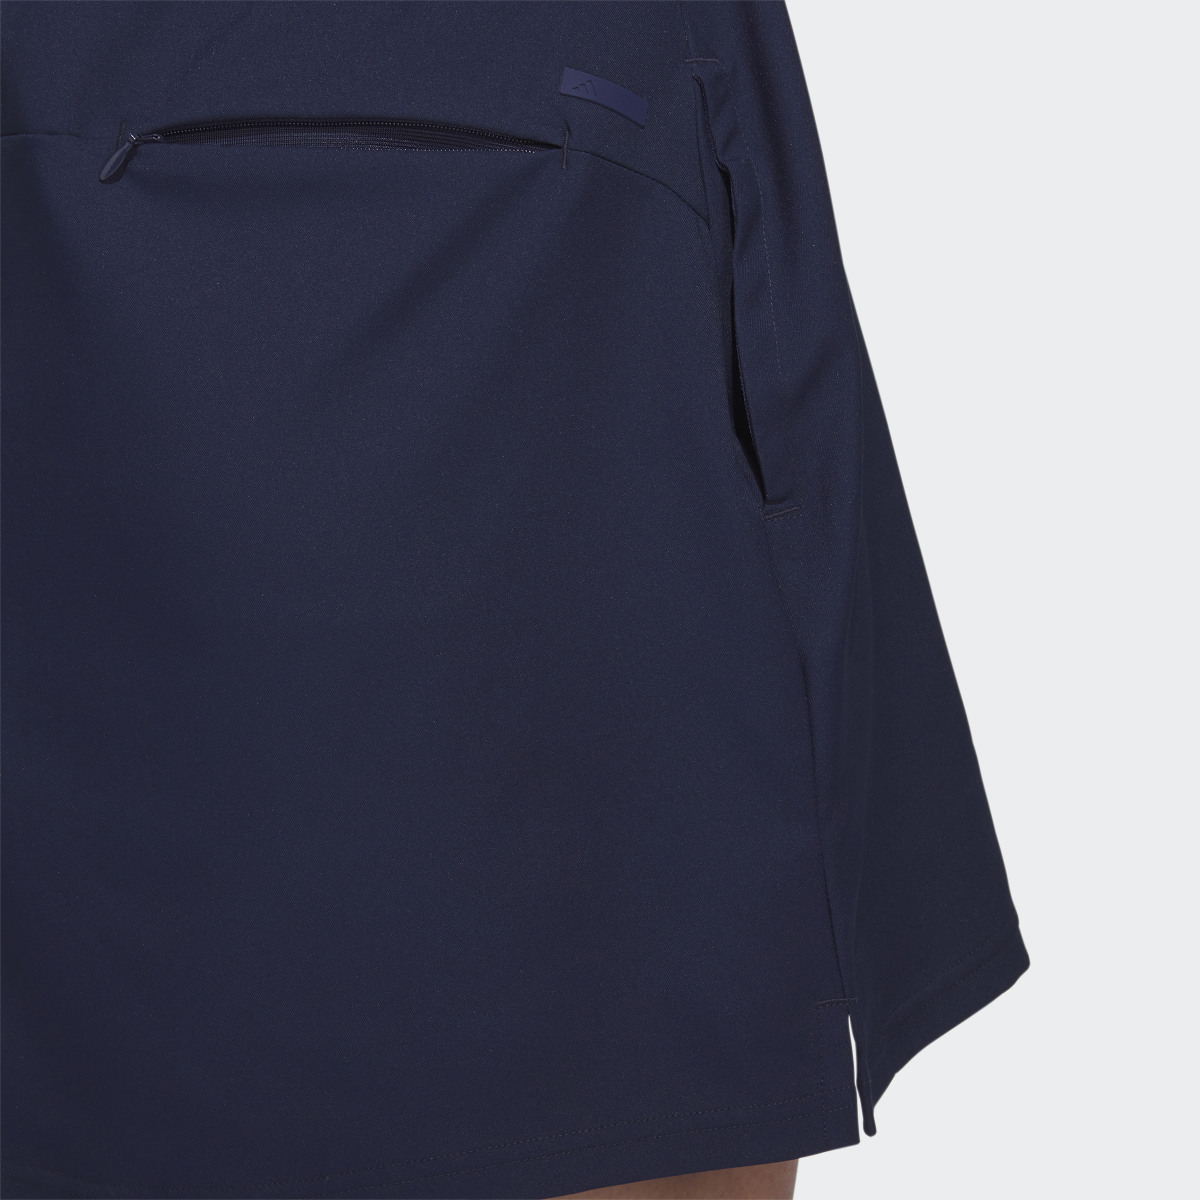 Adidas Long Sleeve Golf Dress. 4